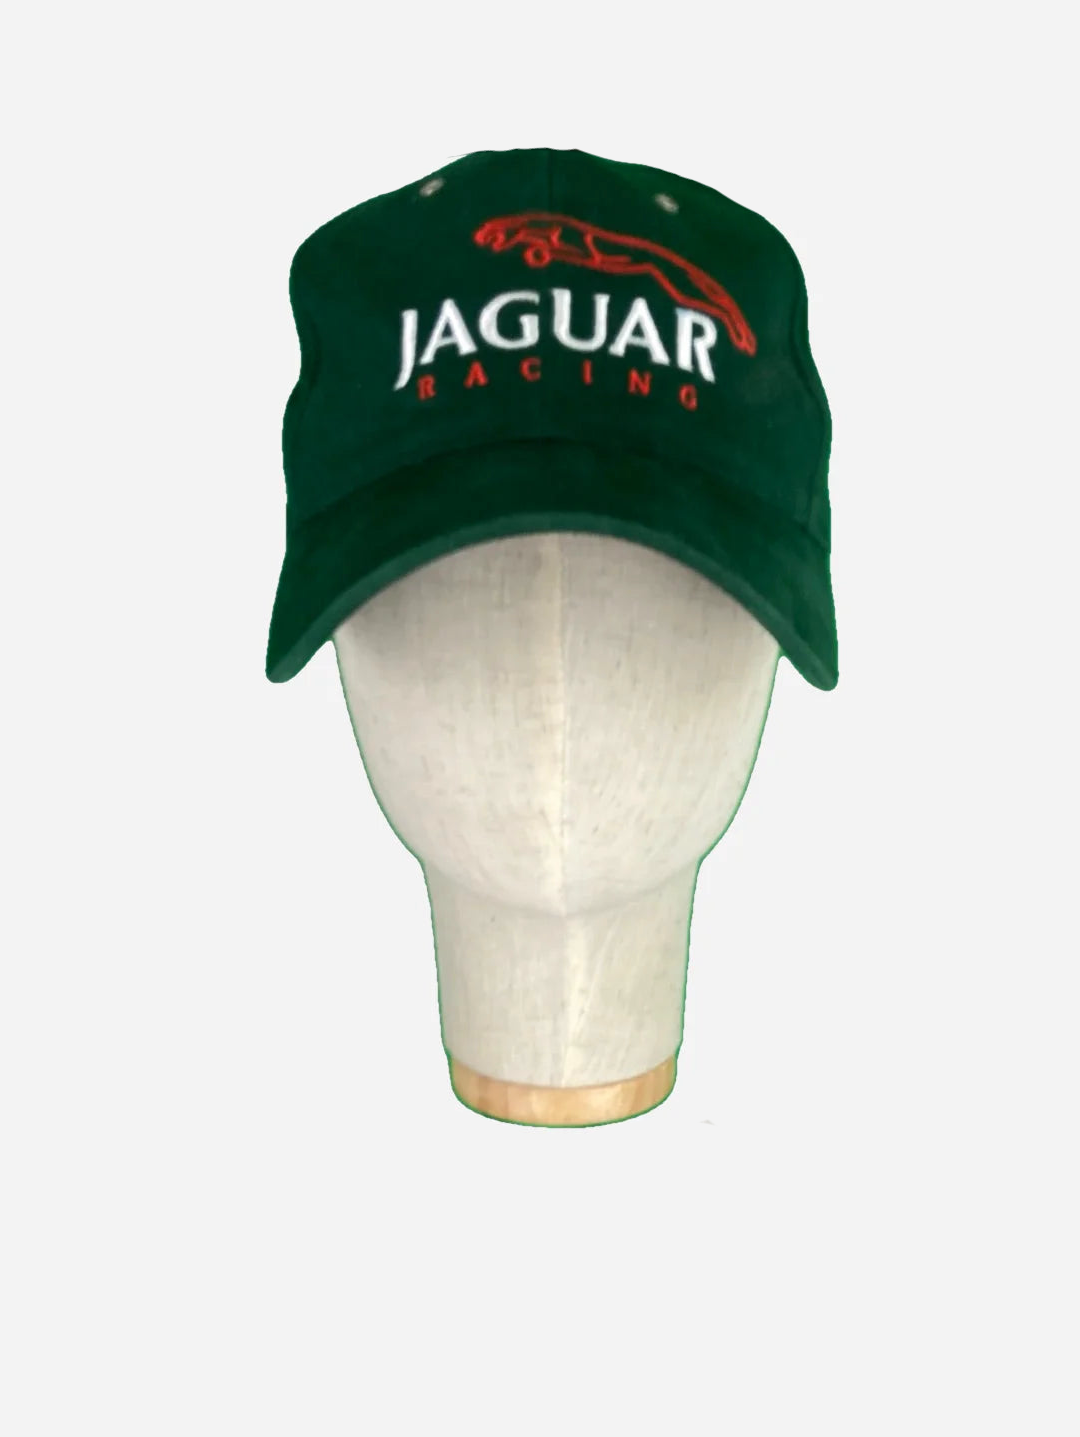 Jaguar Racing Cap